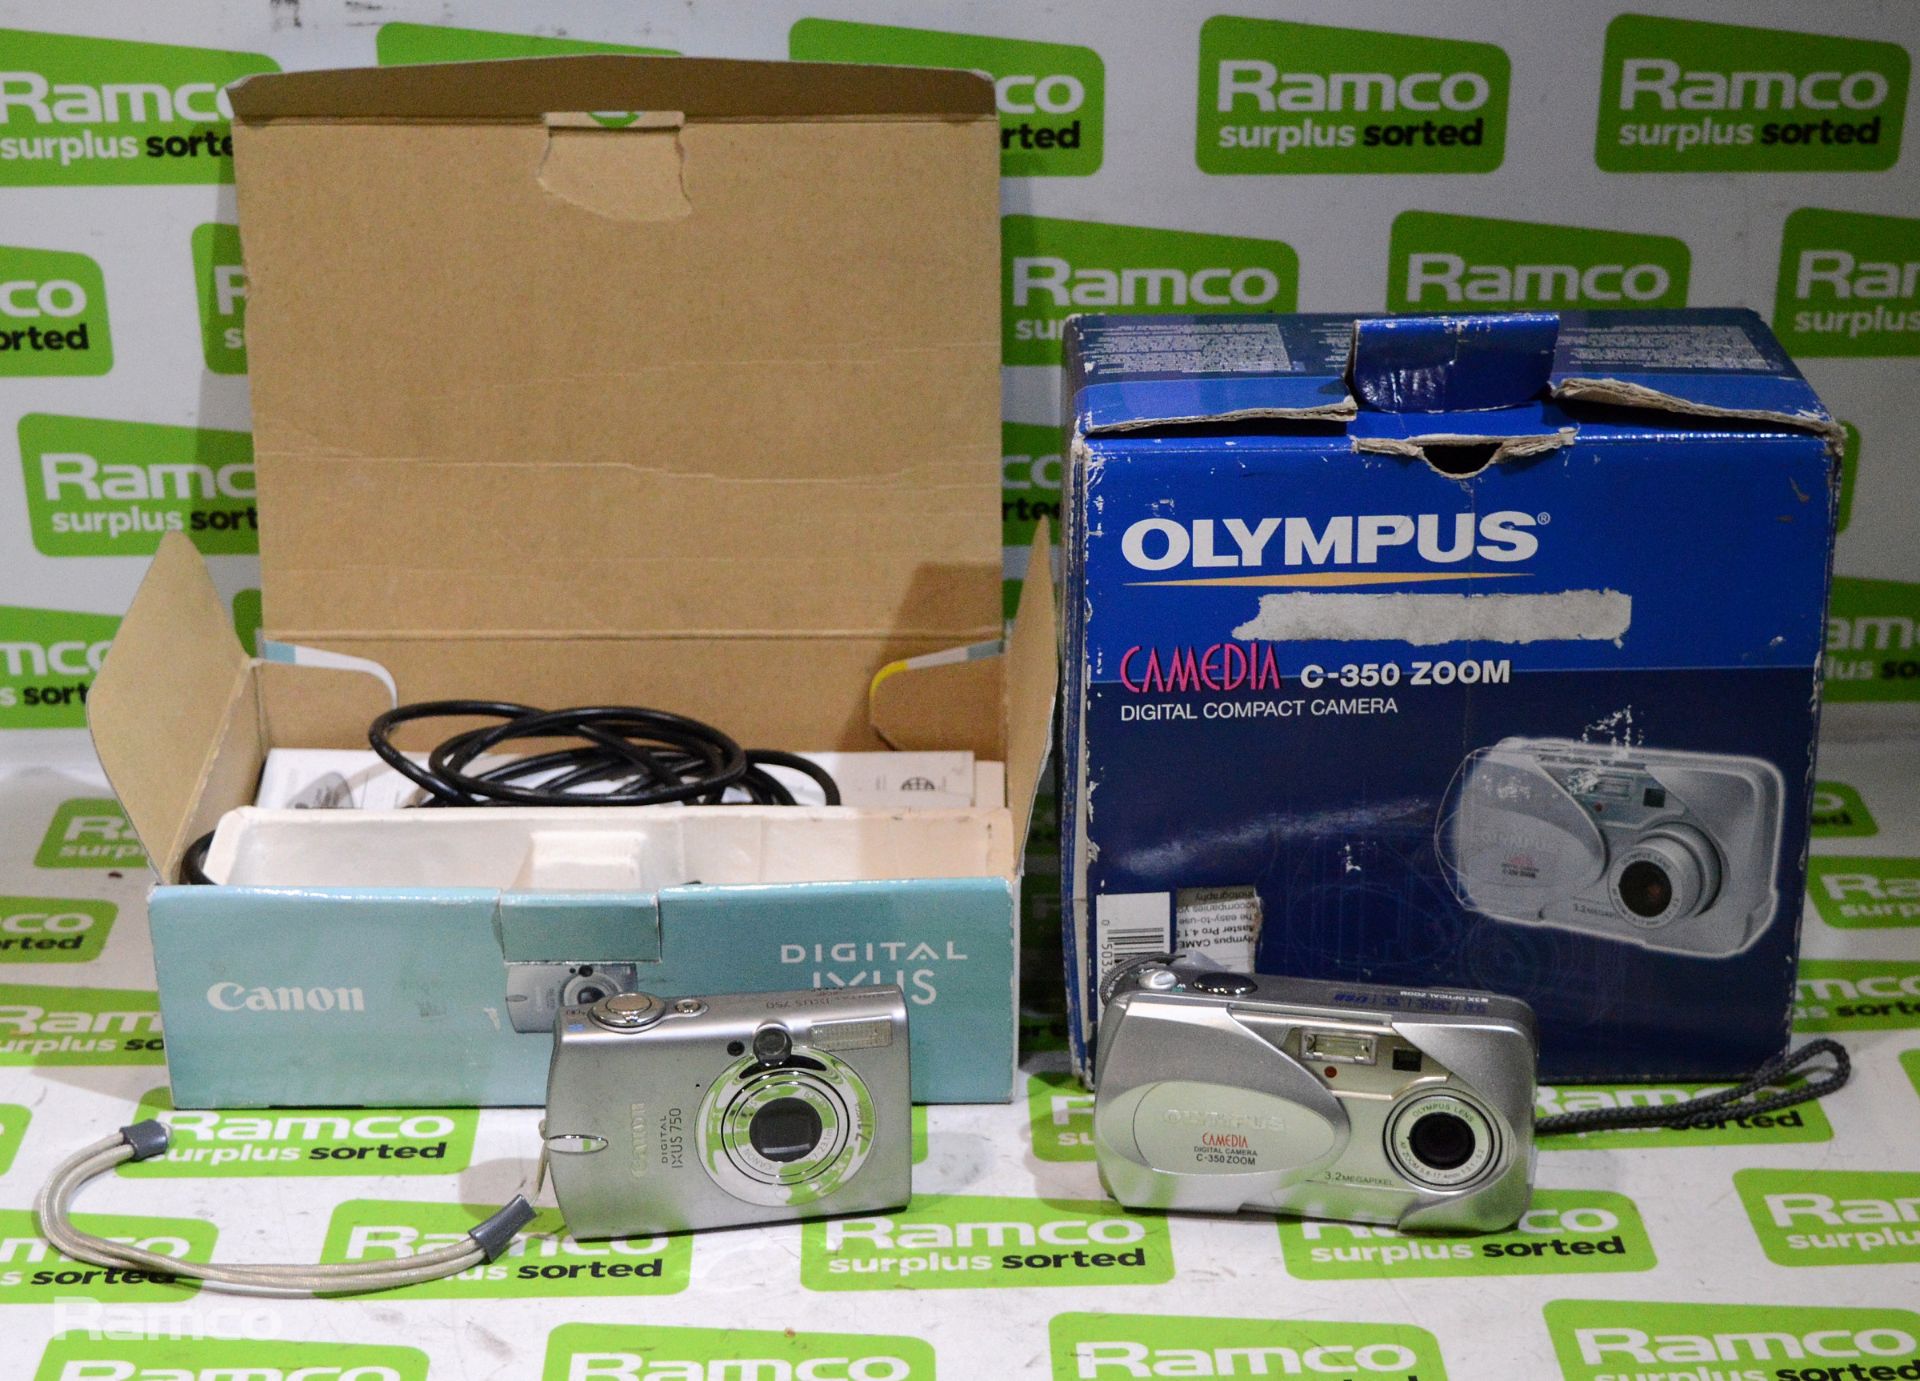 Canon IXUS 750 Digital camera, Olympus C-350 Zoom Digital camera